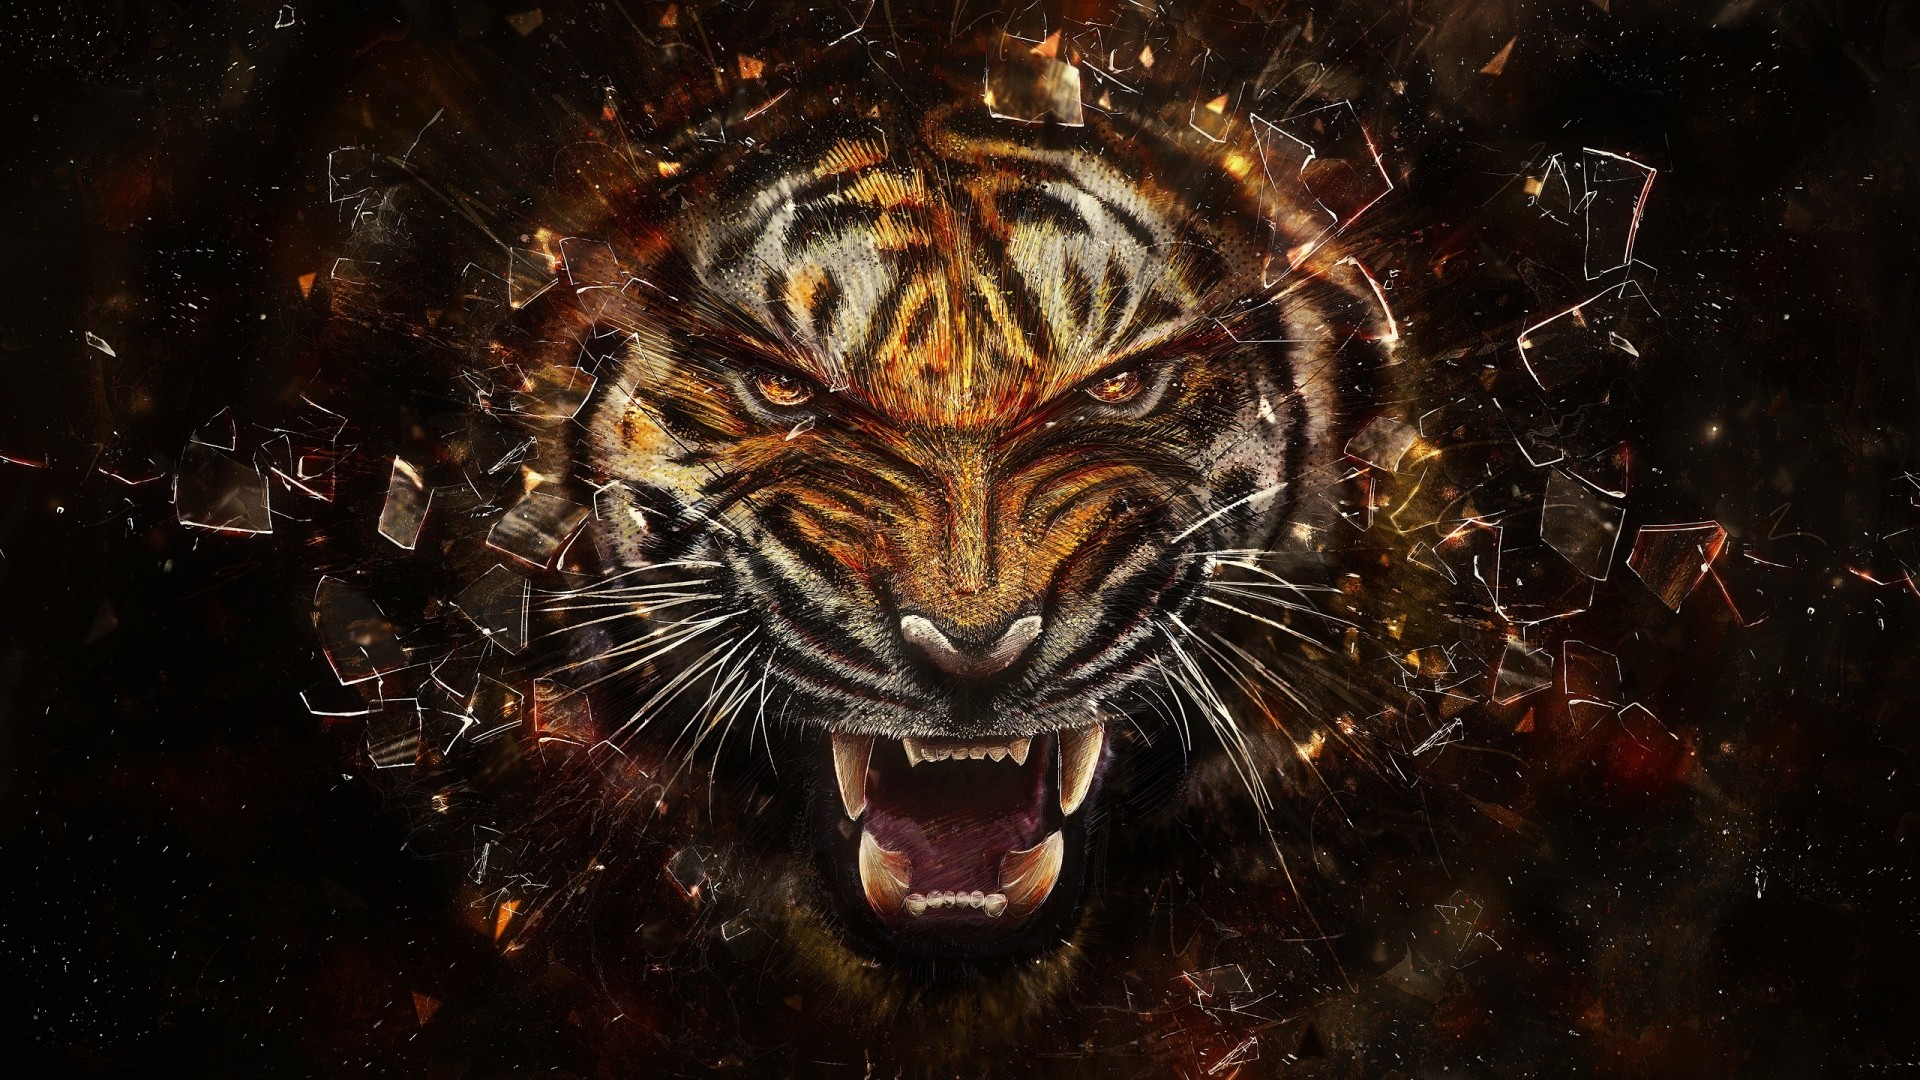 General 1920x1080 tiger glass broken glass shards face teeth animals artwork digital art mammals big cats